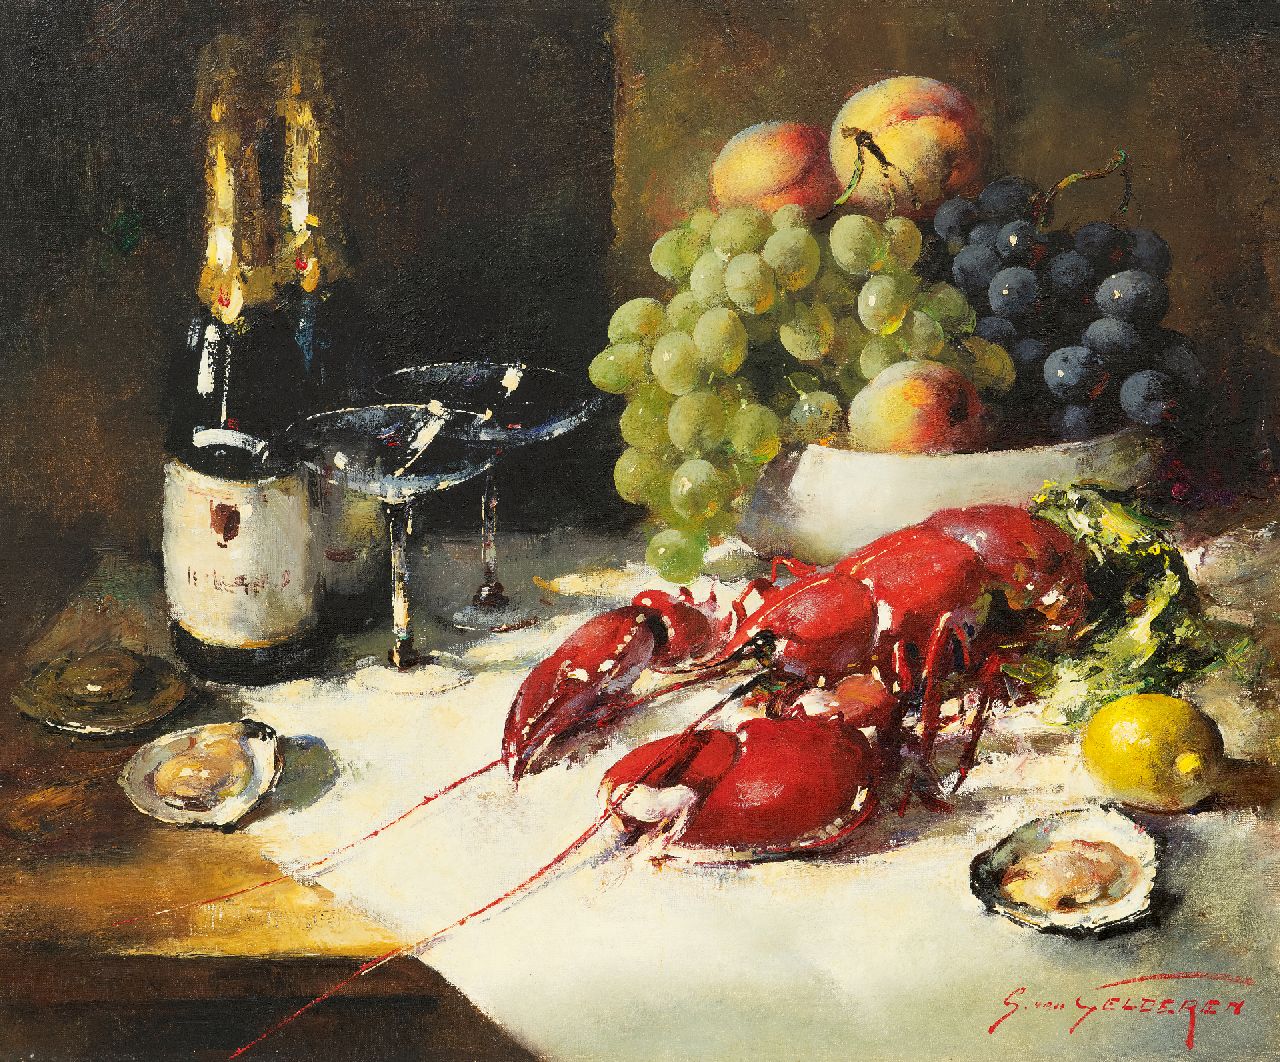 Gelderen S. van | Simon van Gelderen, Still life with Champagne, shellfish and fruit, oil on canvas 50.3 x 60.2 cm, signed l.r.